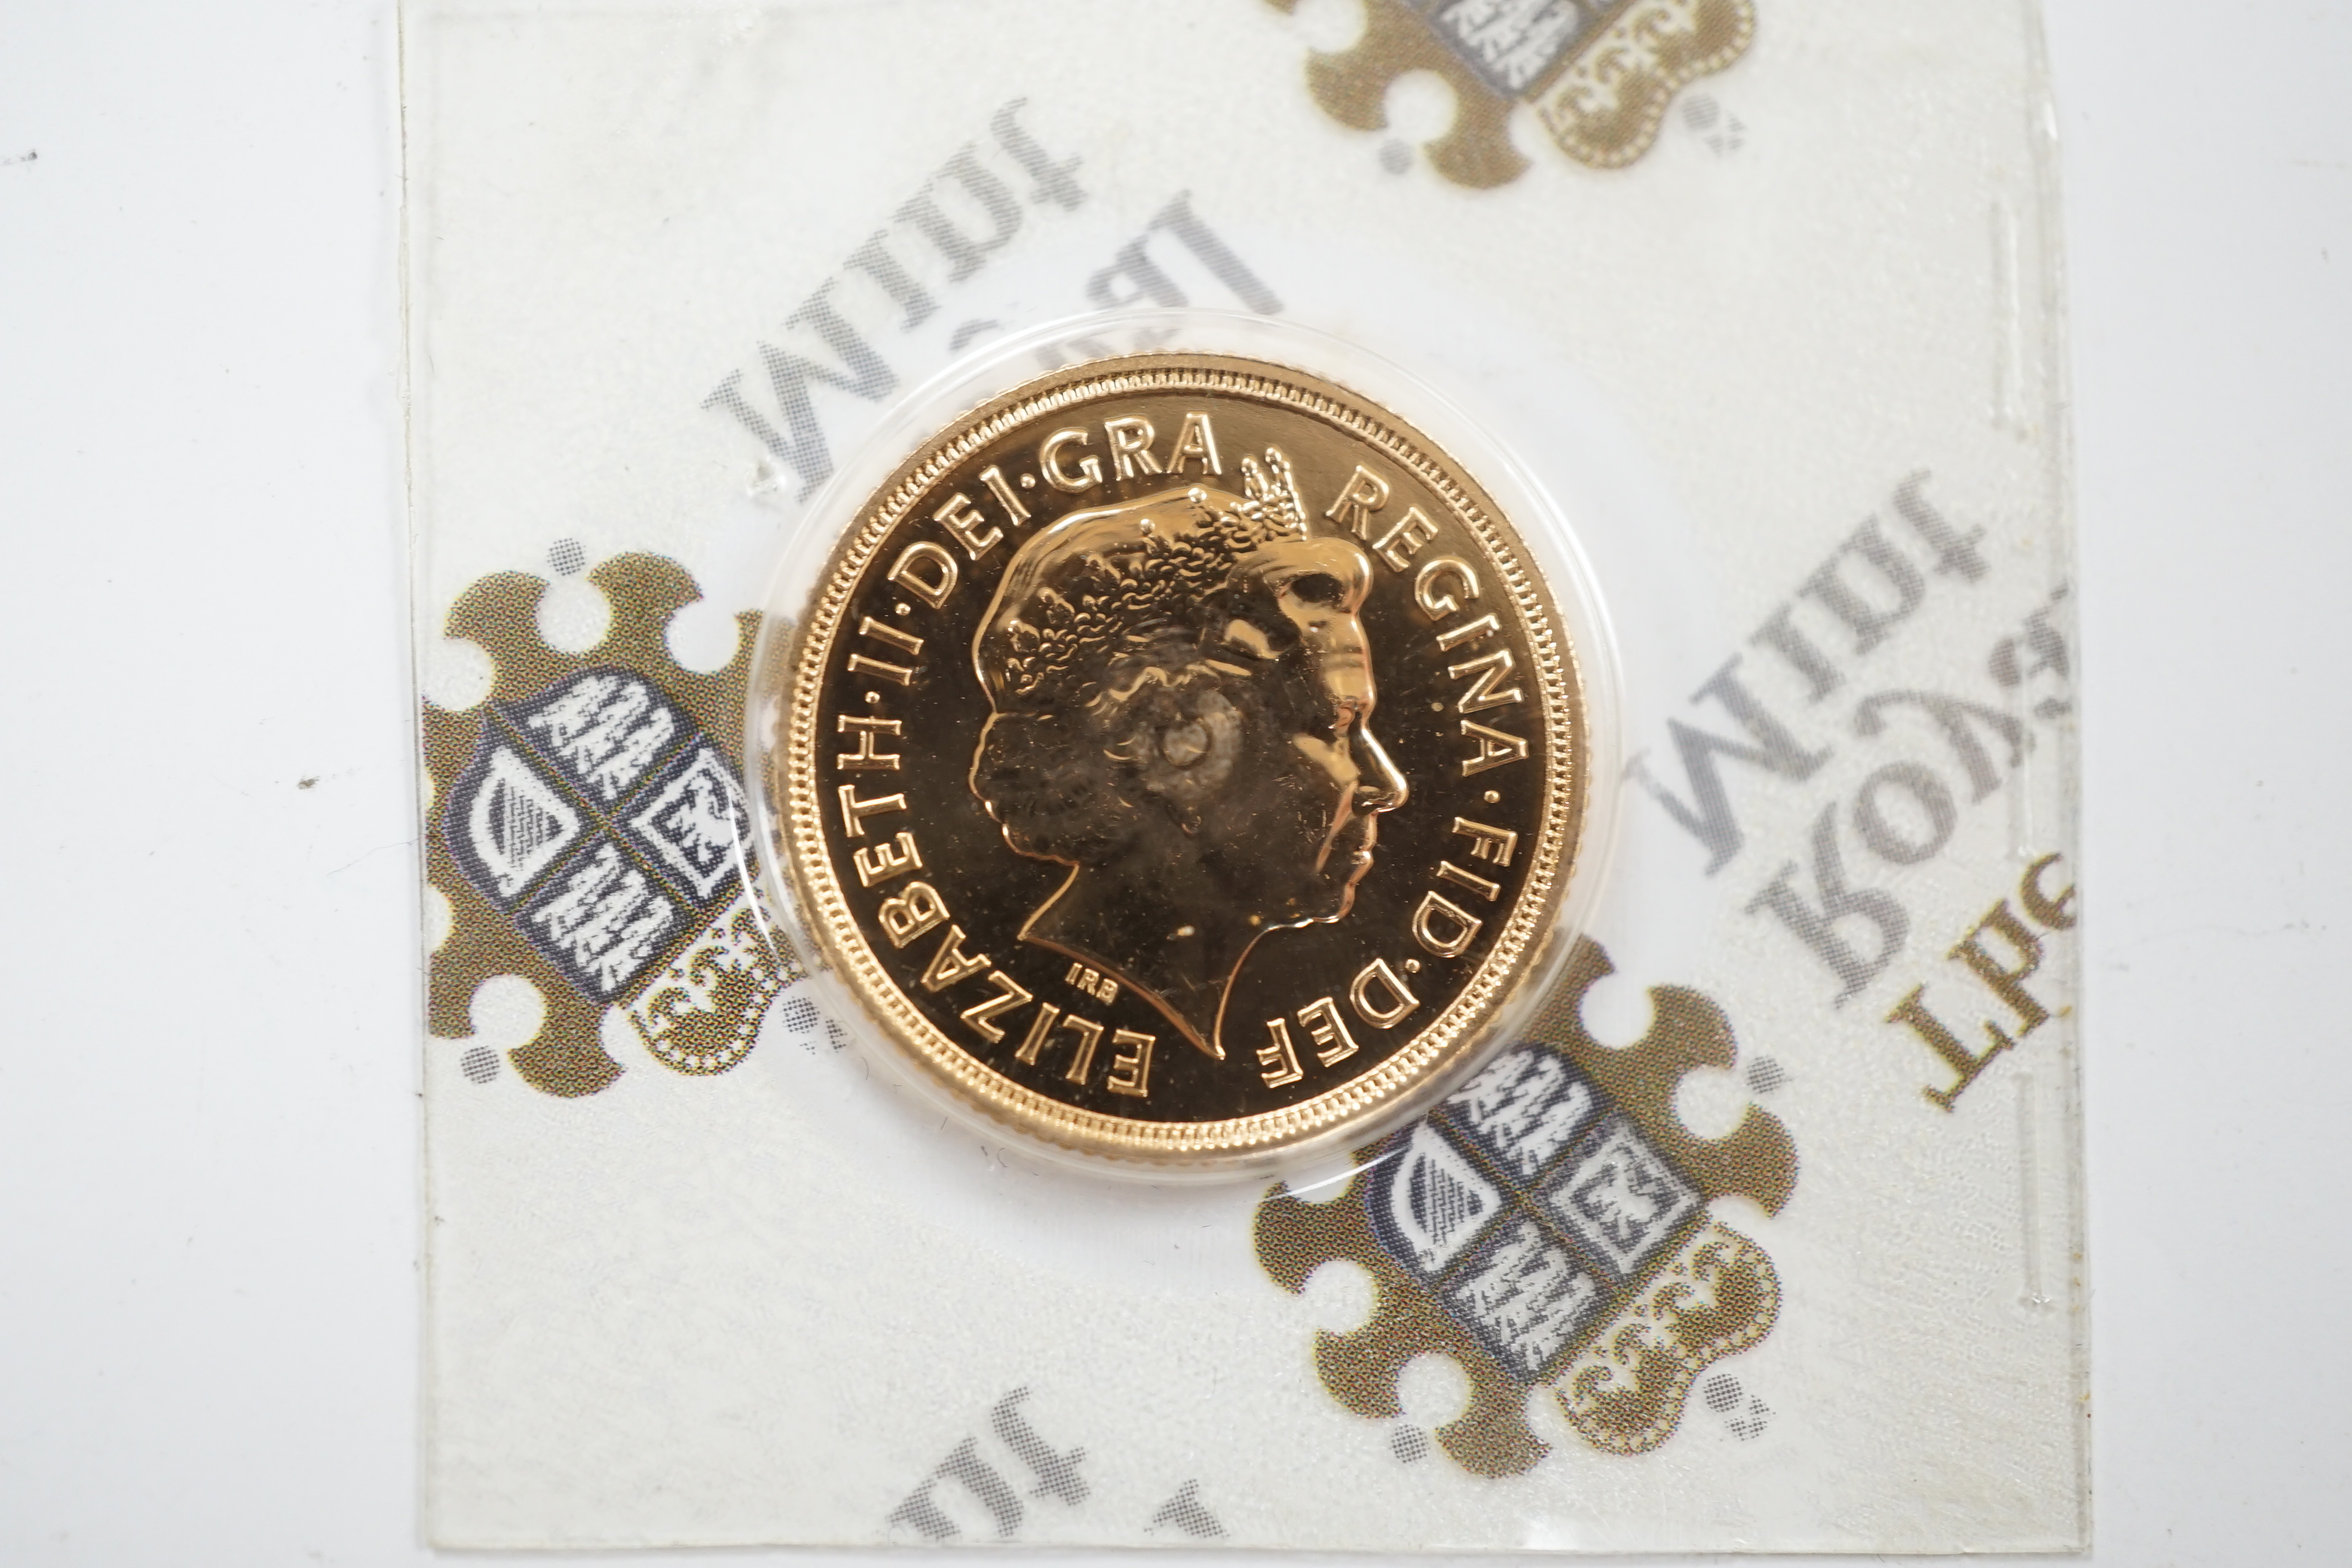 British gold coins, Elizabeth II, Royal Mint Diamond jubilee gold sovereign 2012, BUNC